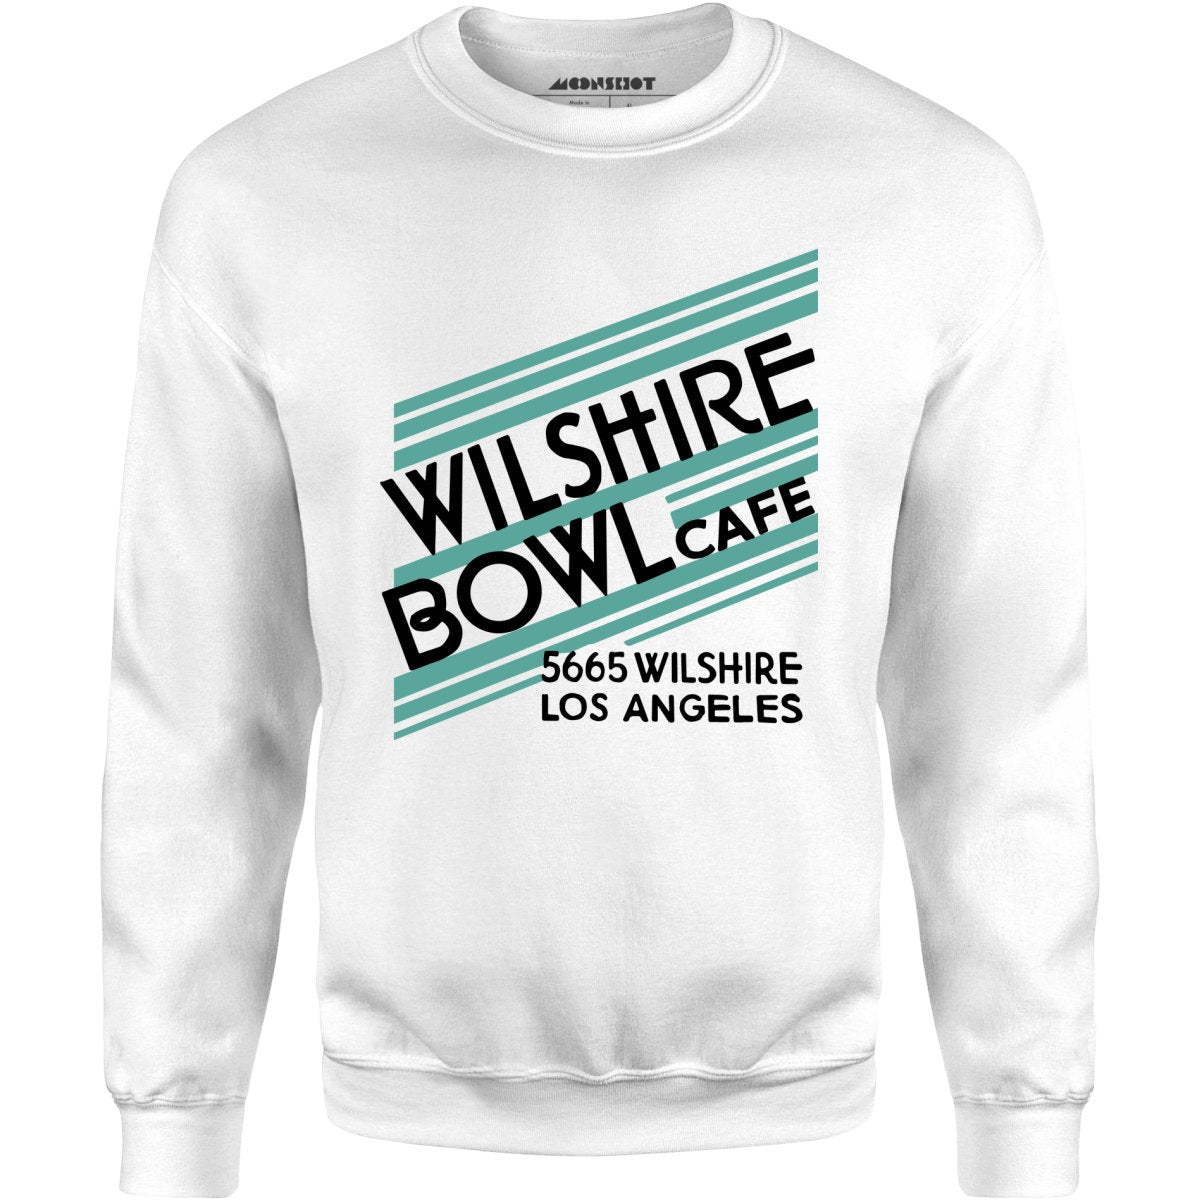 Wilshire Bowl Cafe - Los Angeles, CA - Vintage Restaurant - Unisex Sweatshirt